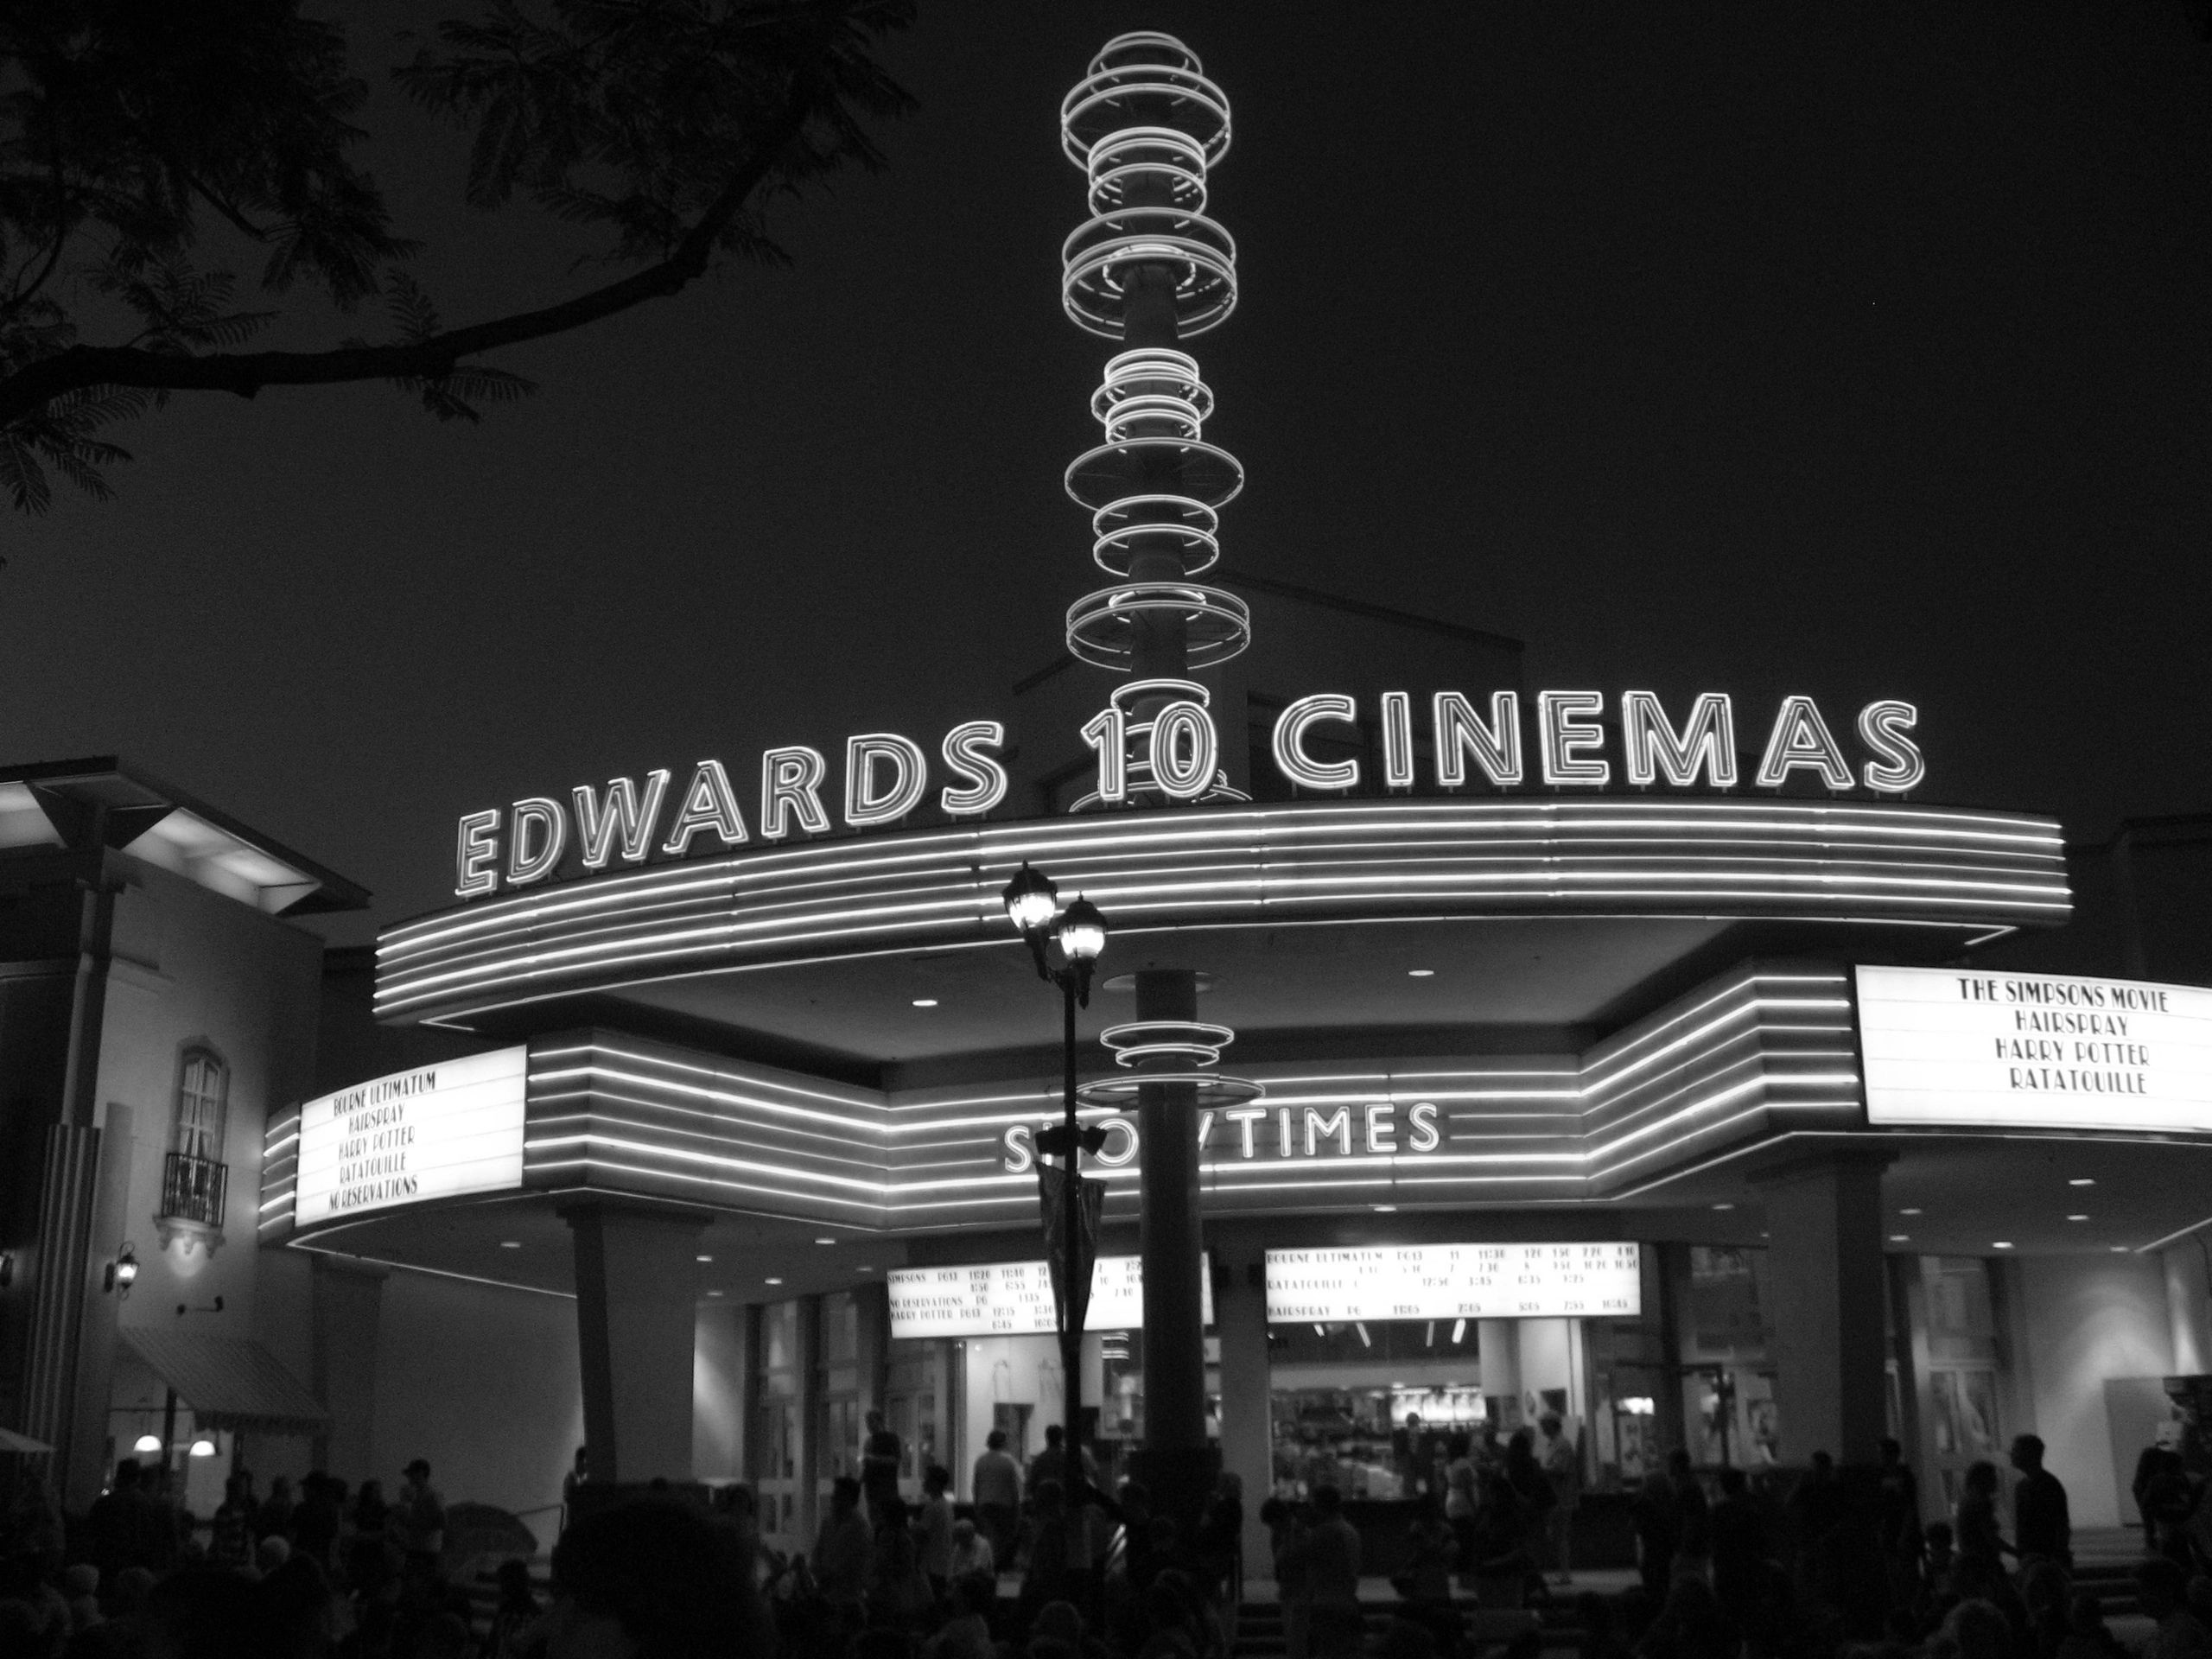 Edwards 8 Theater in El Monte, A Brief History